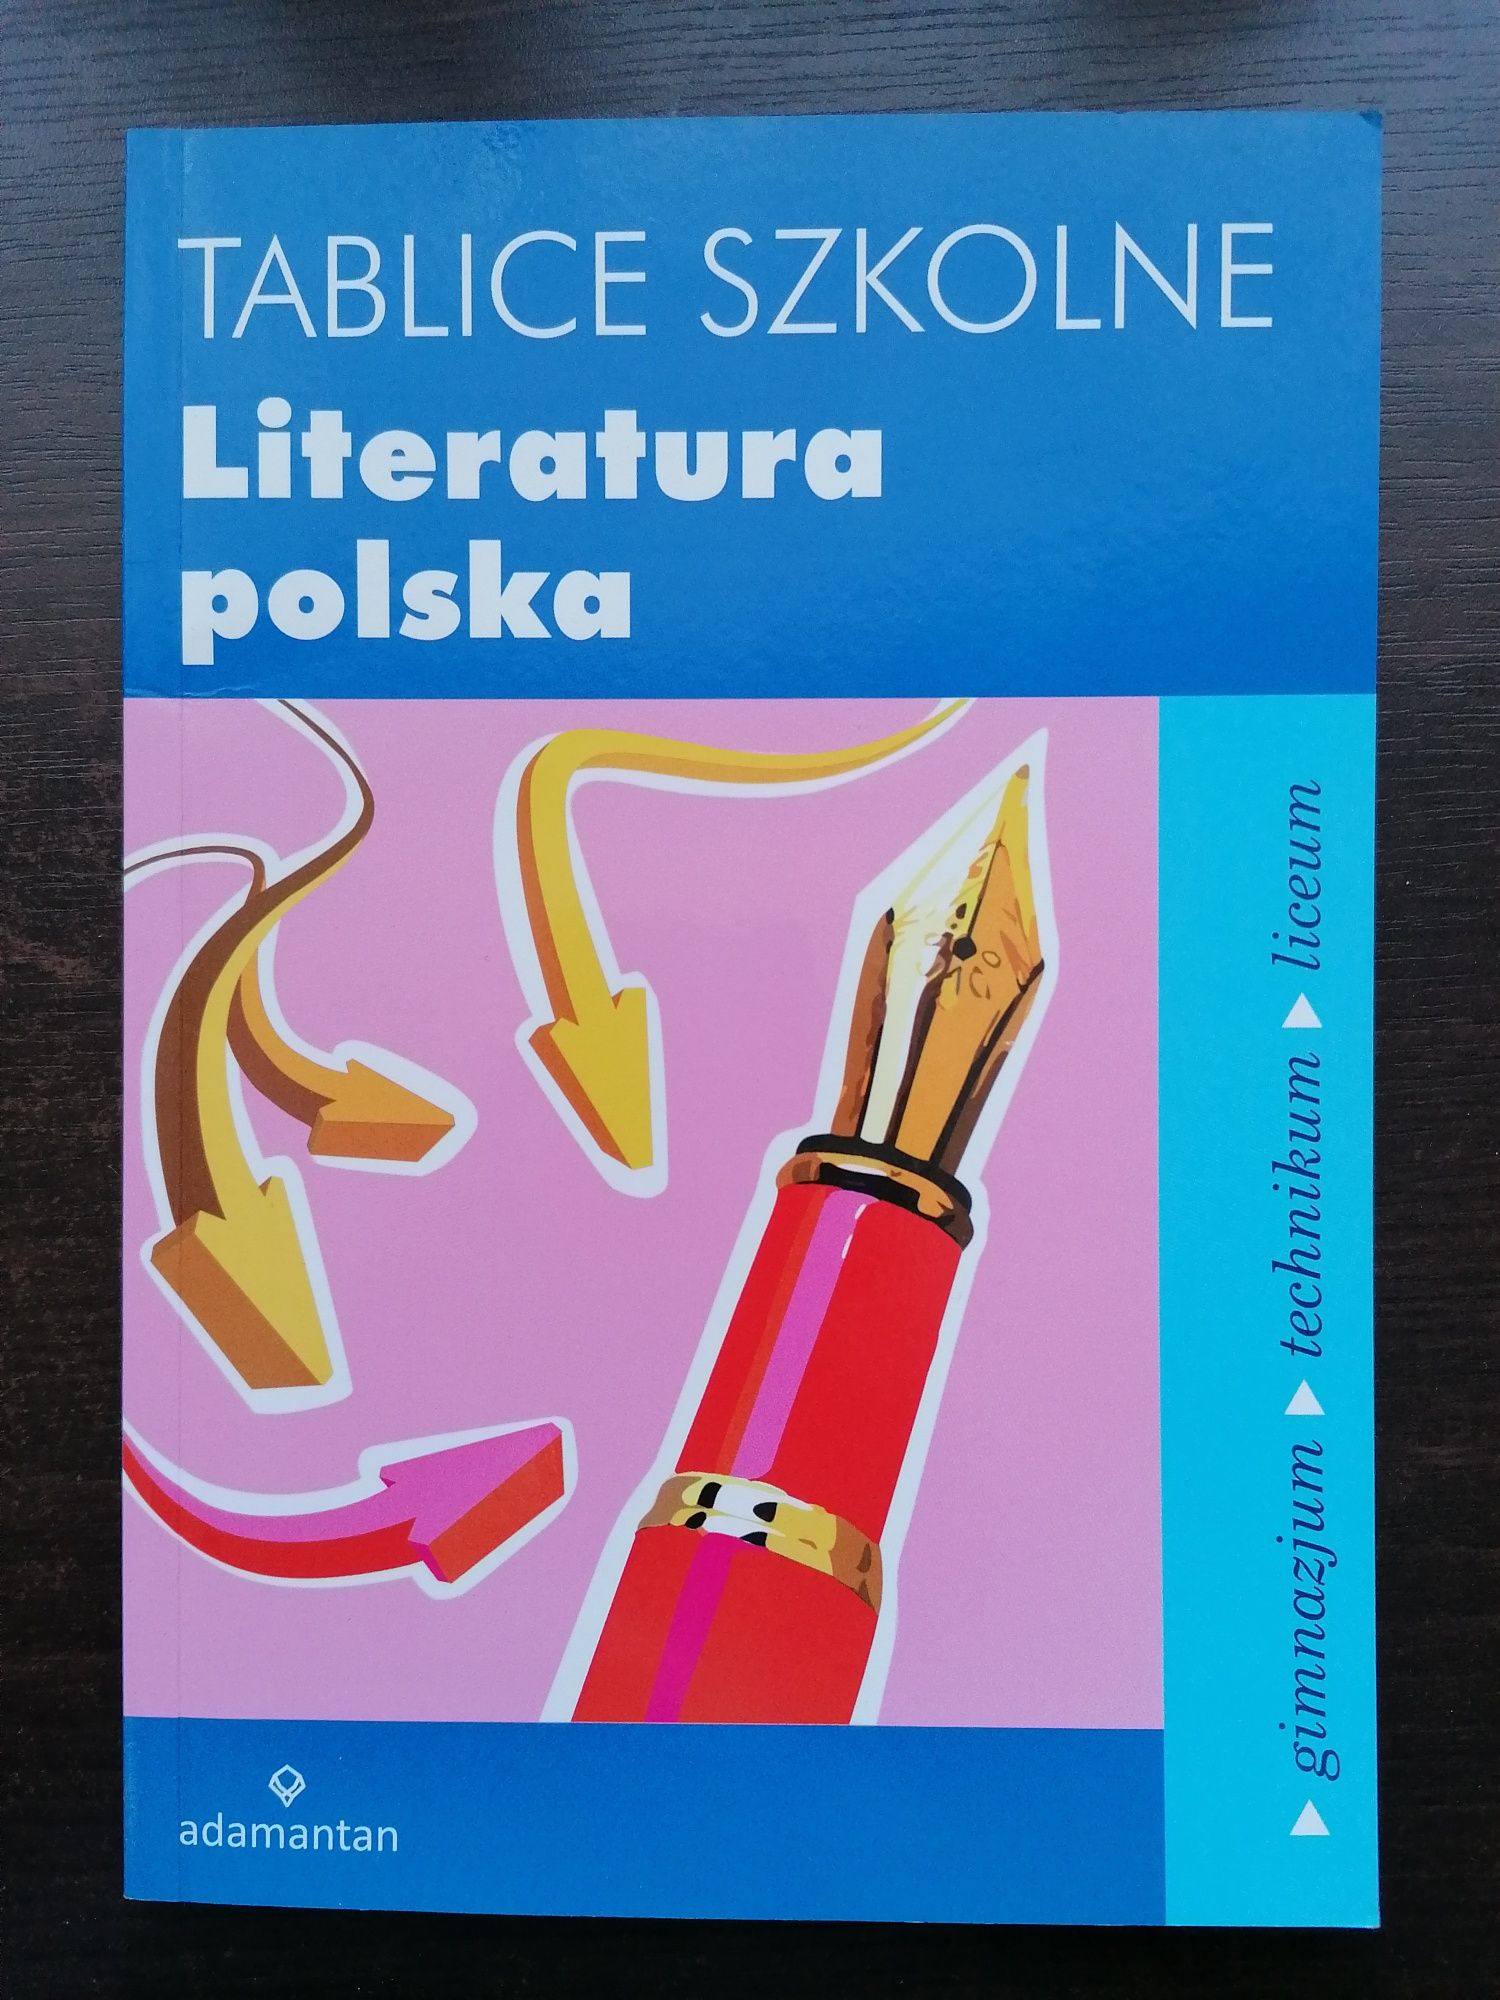 Tablice szkolne literatura polska, adamantan, polski, matura